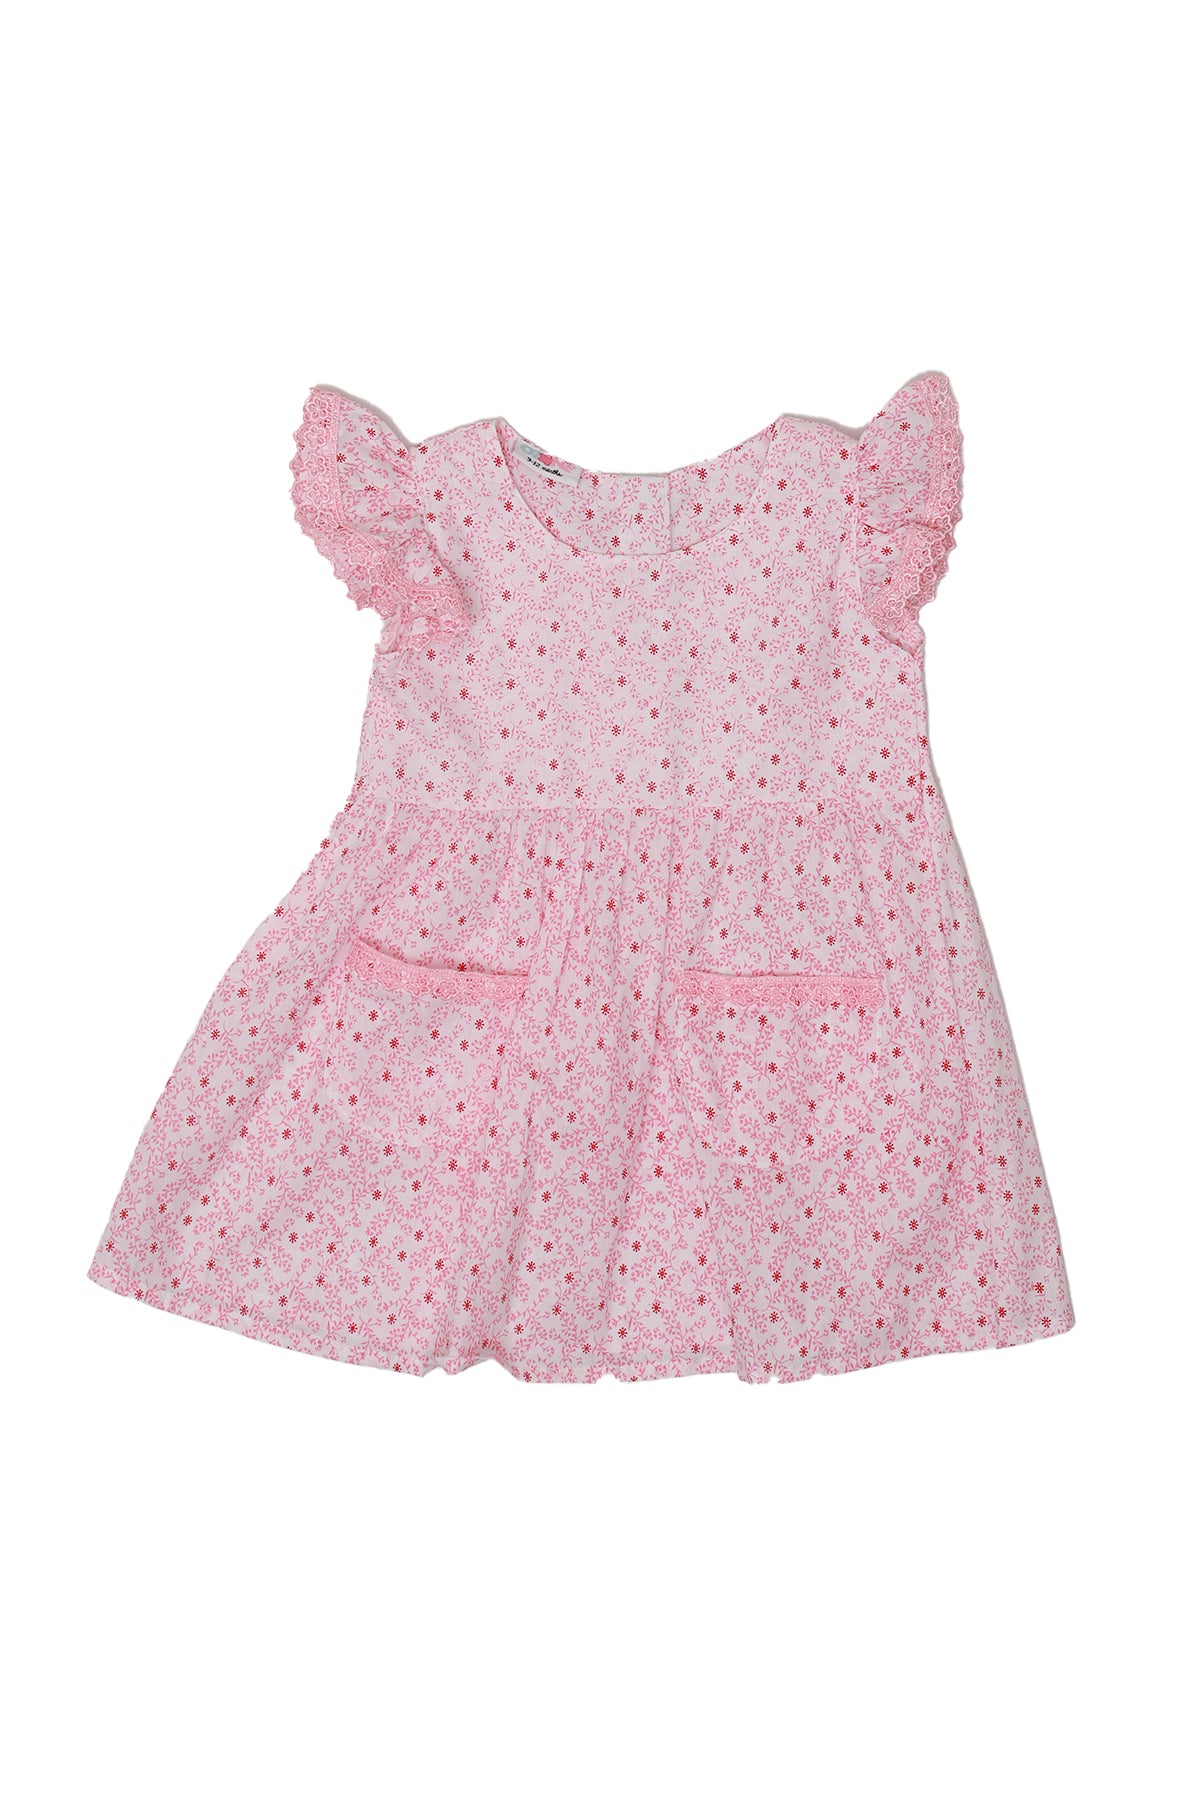 Ozone Baby Girls Sleeveless Printed Dress